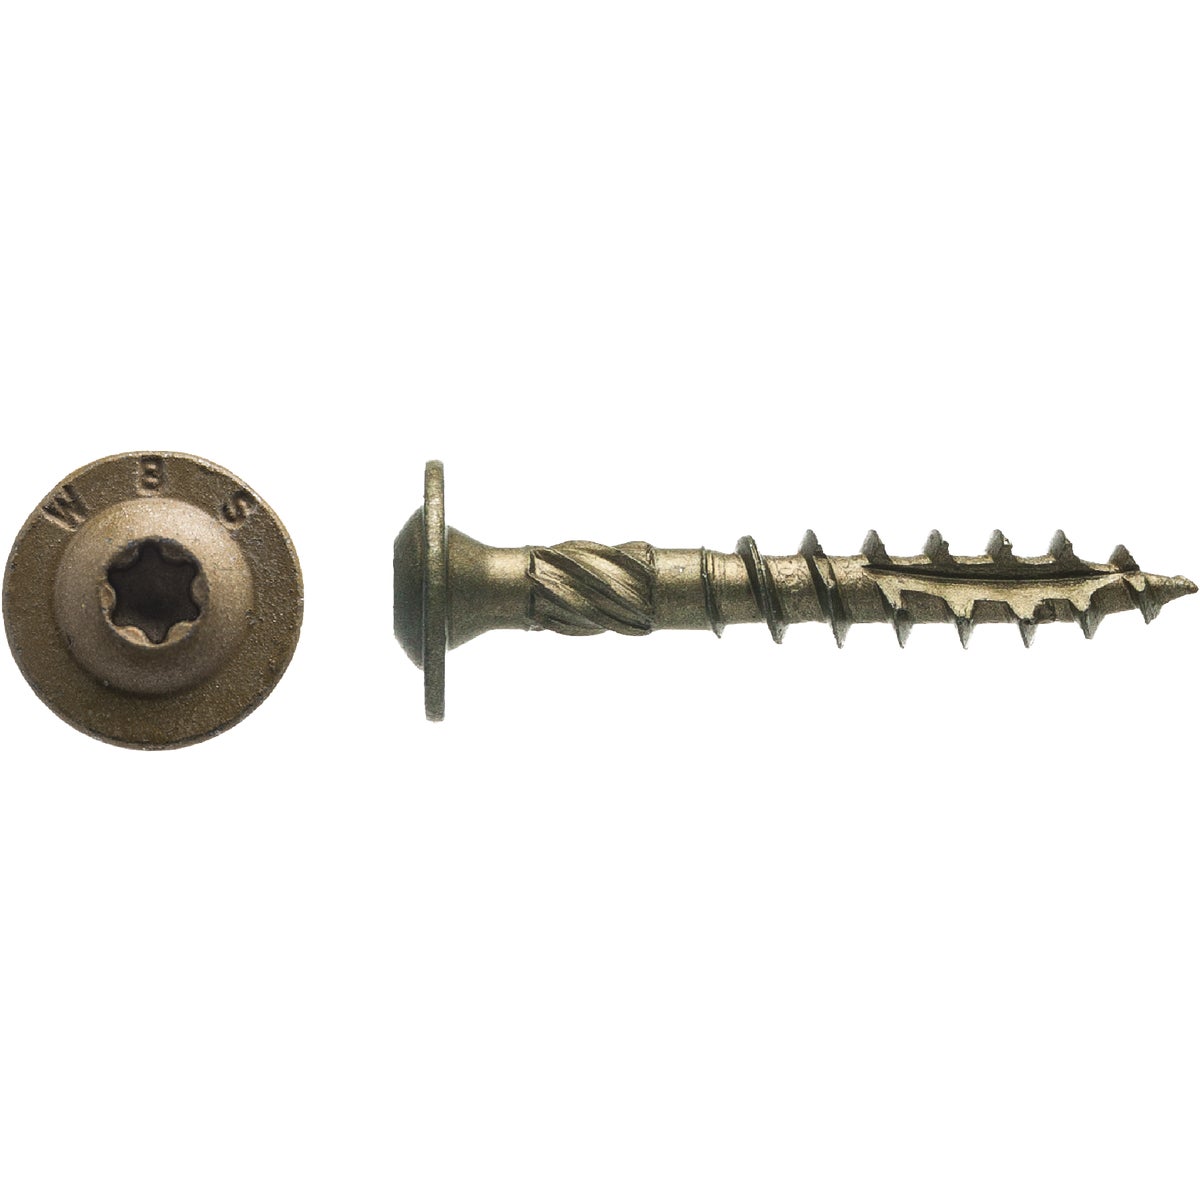 Item 201416, Structure screw features: round washer head, knurled shoulder, deep sharp 